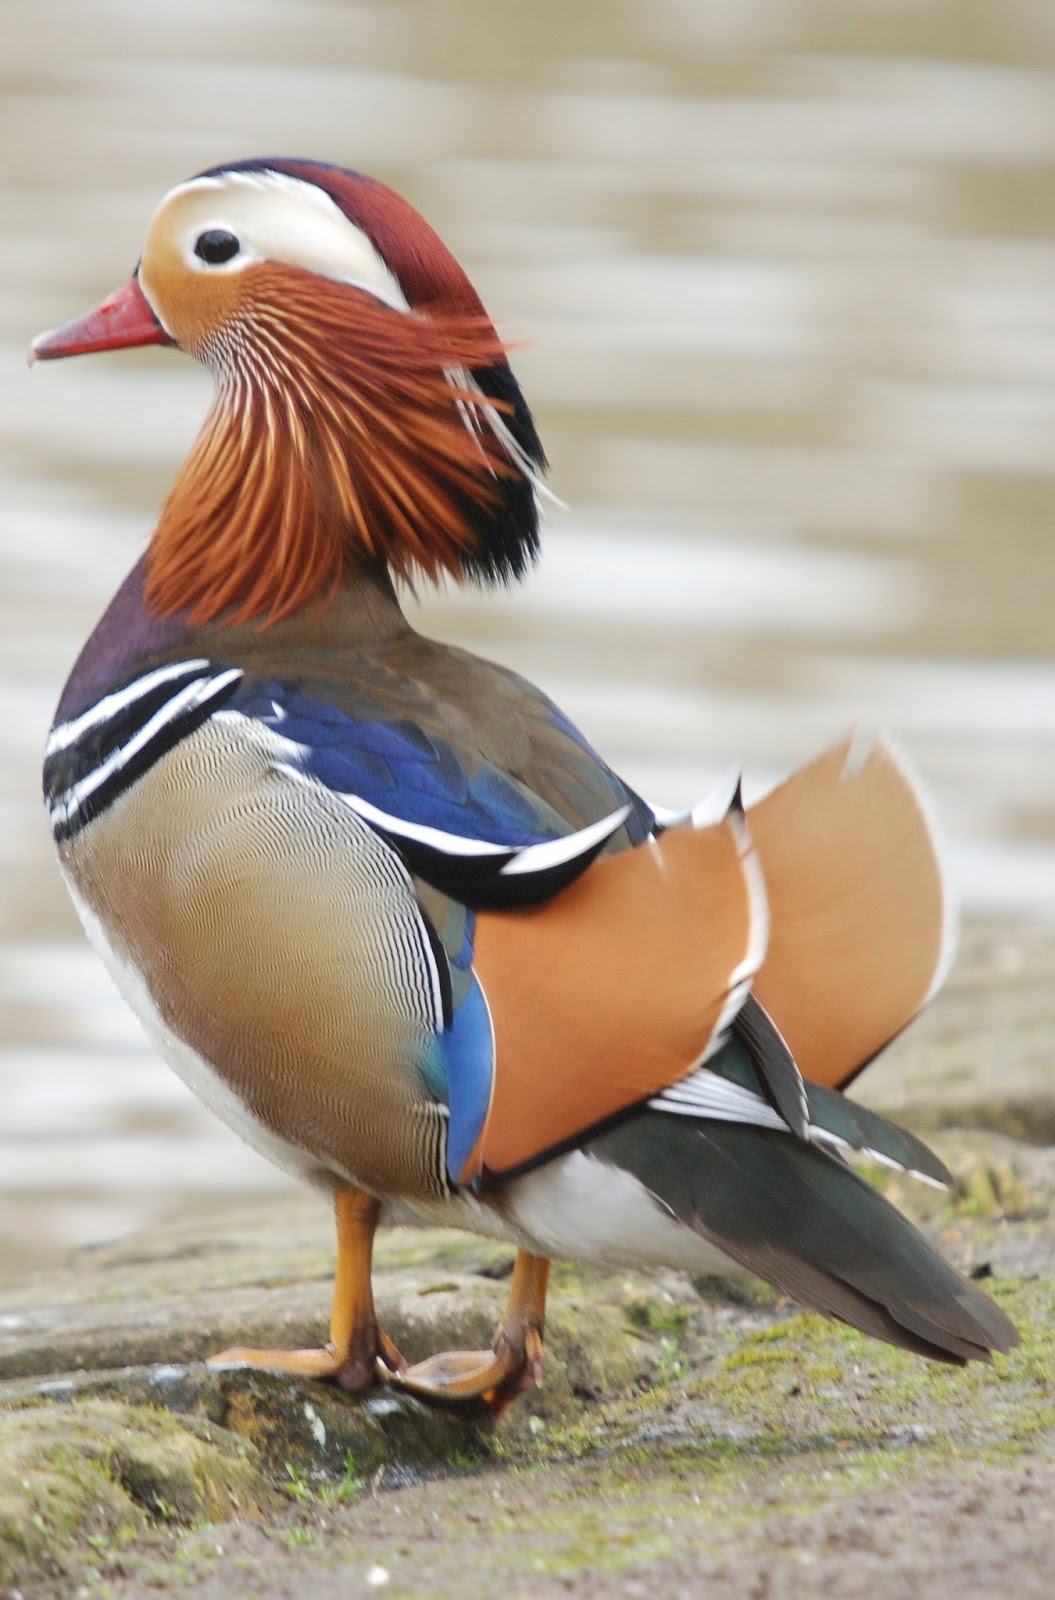 Image of a mandarin duck.